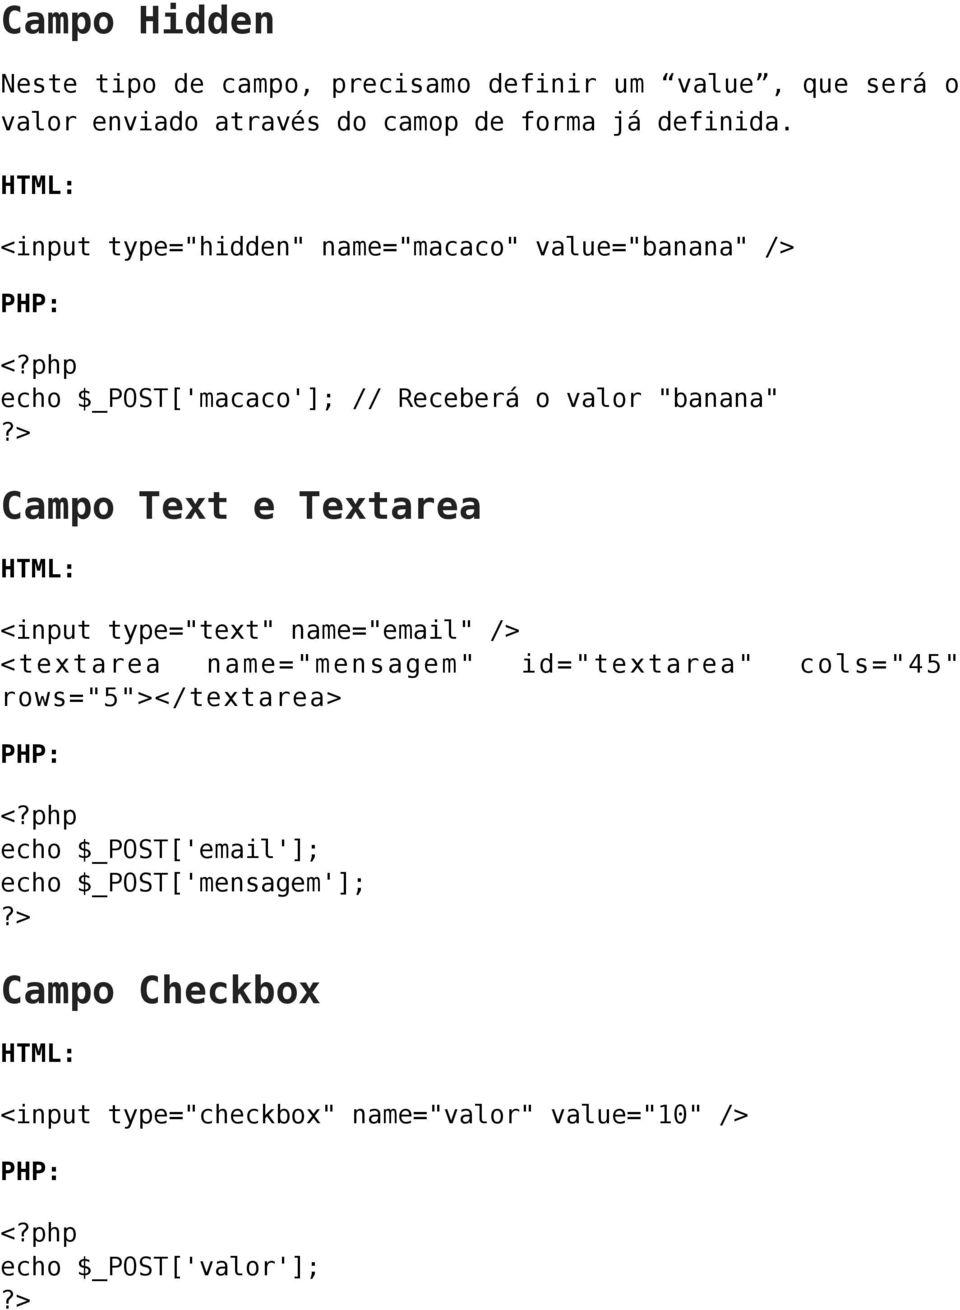 > Campo Text e Textarea HTML: <input type="text" name="email" /> <textarea name="mensagem" id="textarea" cols="45" rows="5"></textarea>